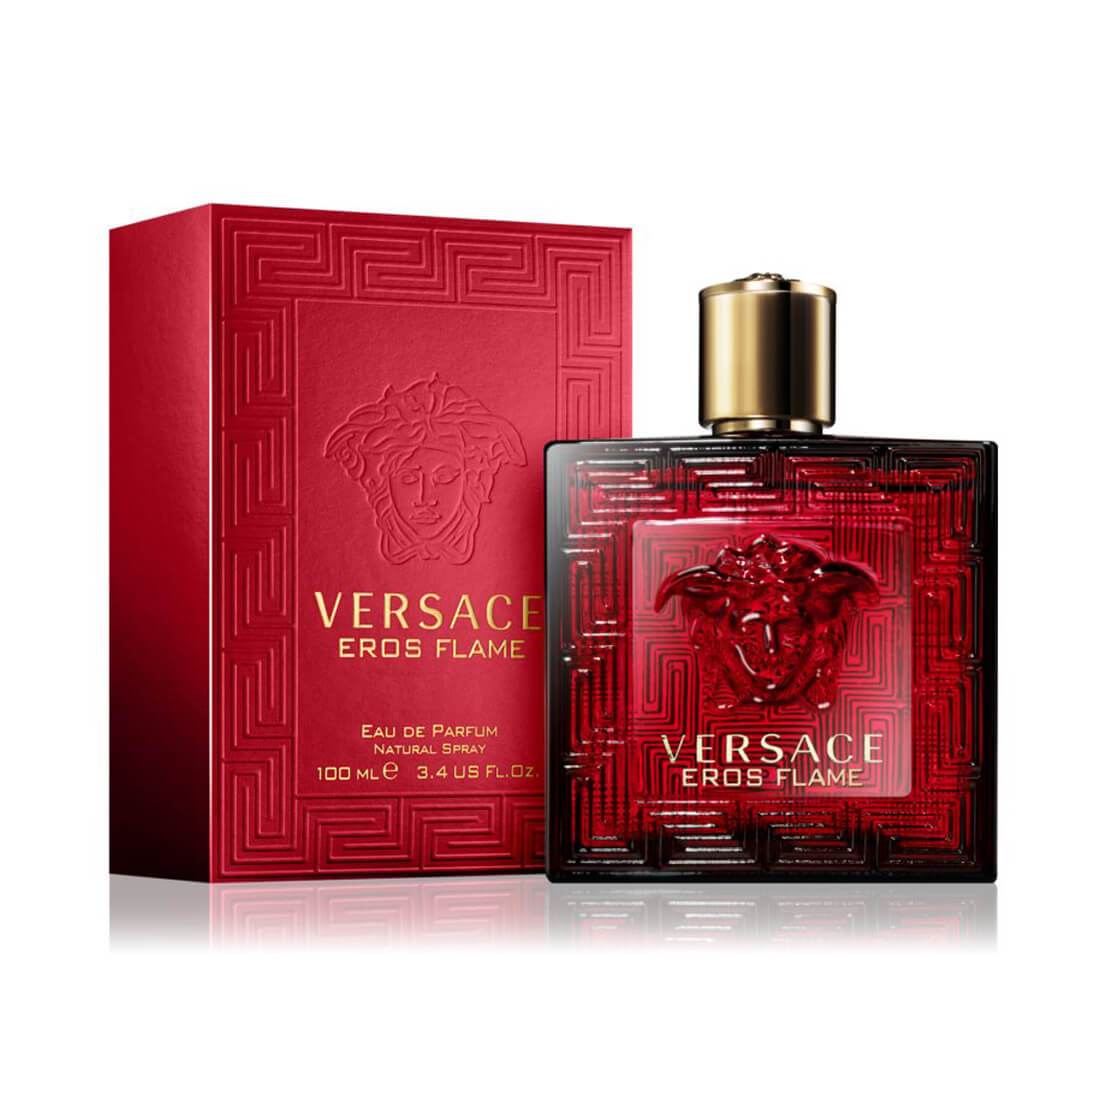 Best Versace Eros Flame Eau De Parfum Price And Reviews In